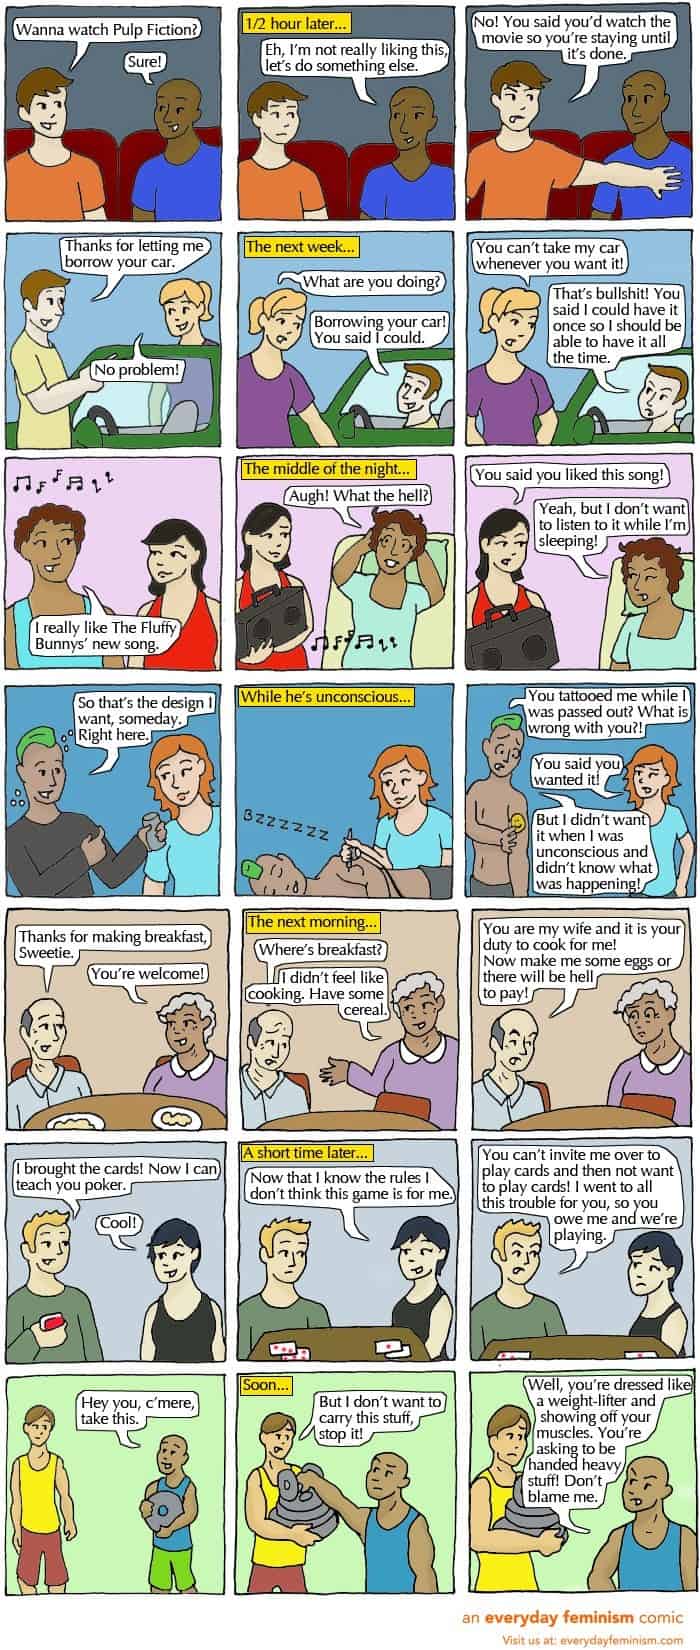 cartoon depicting consent scenarios